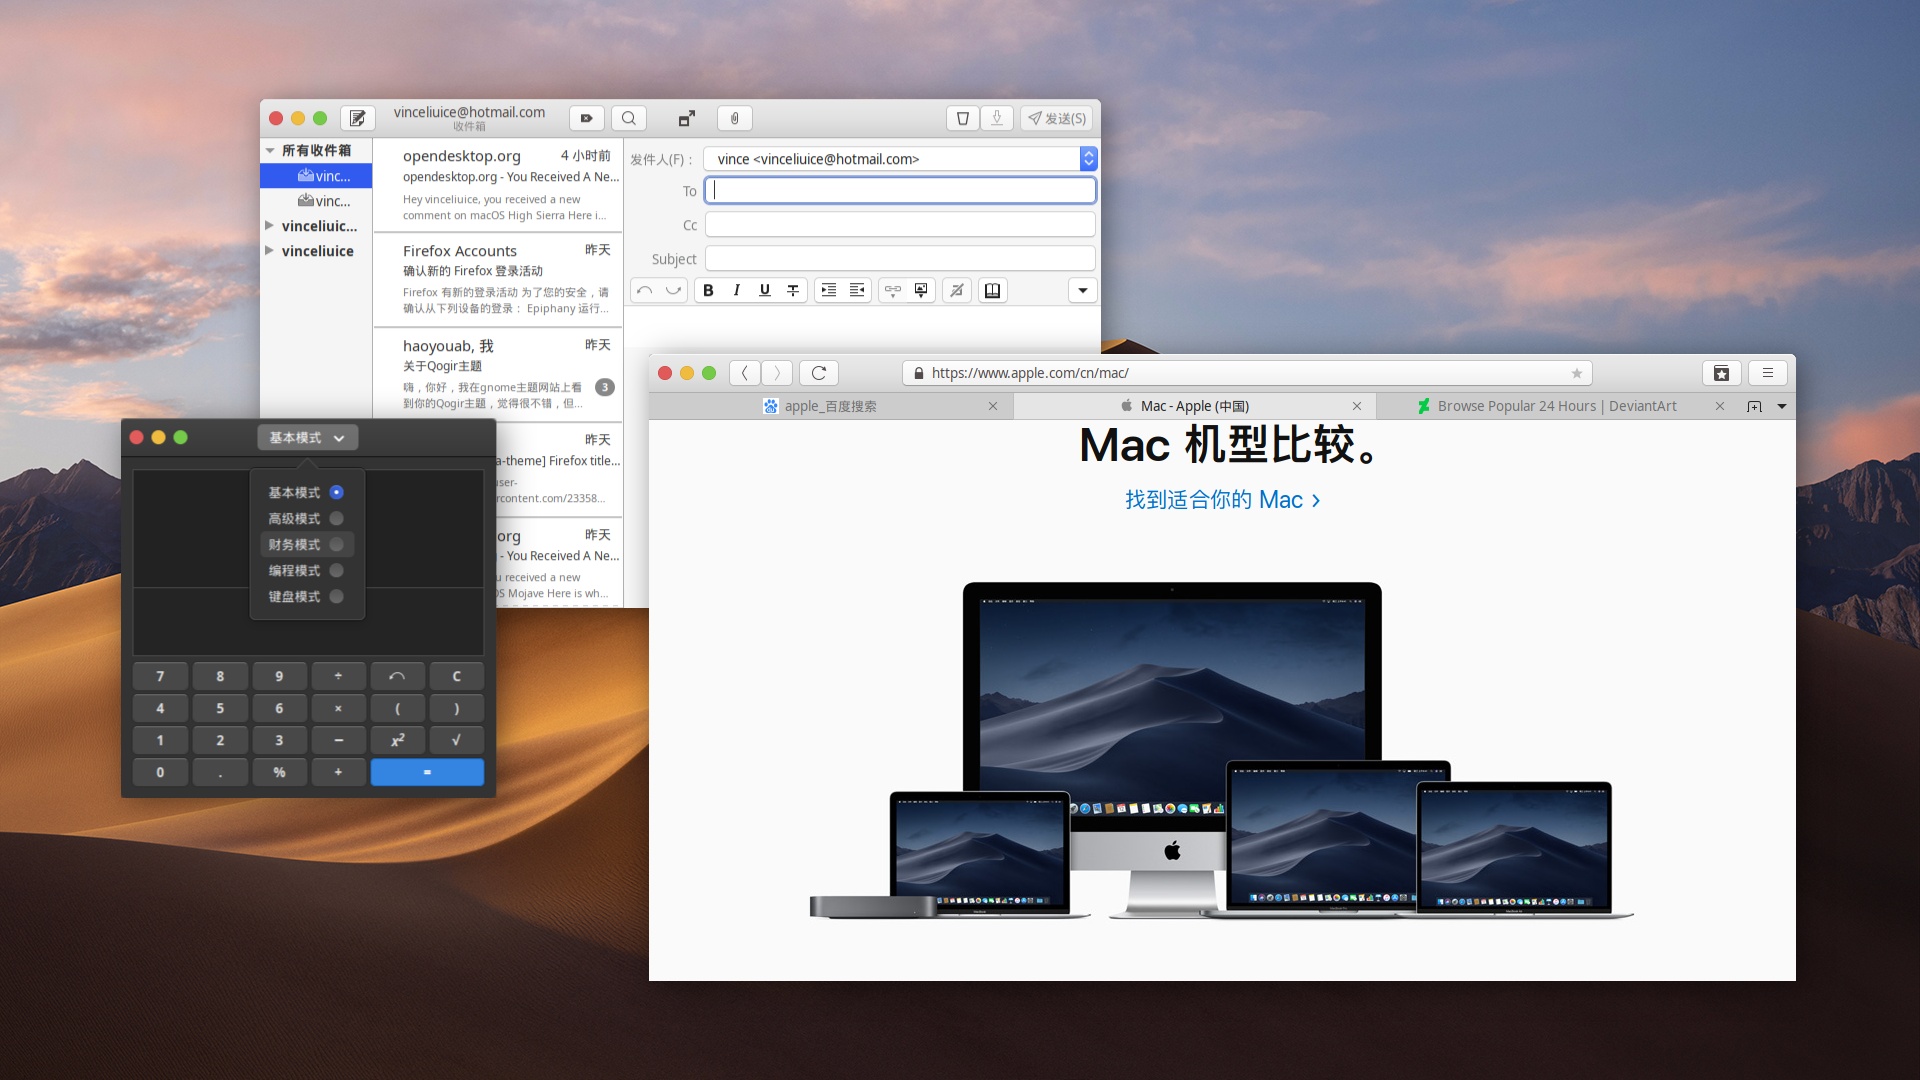 sametime client for mac